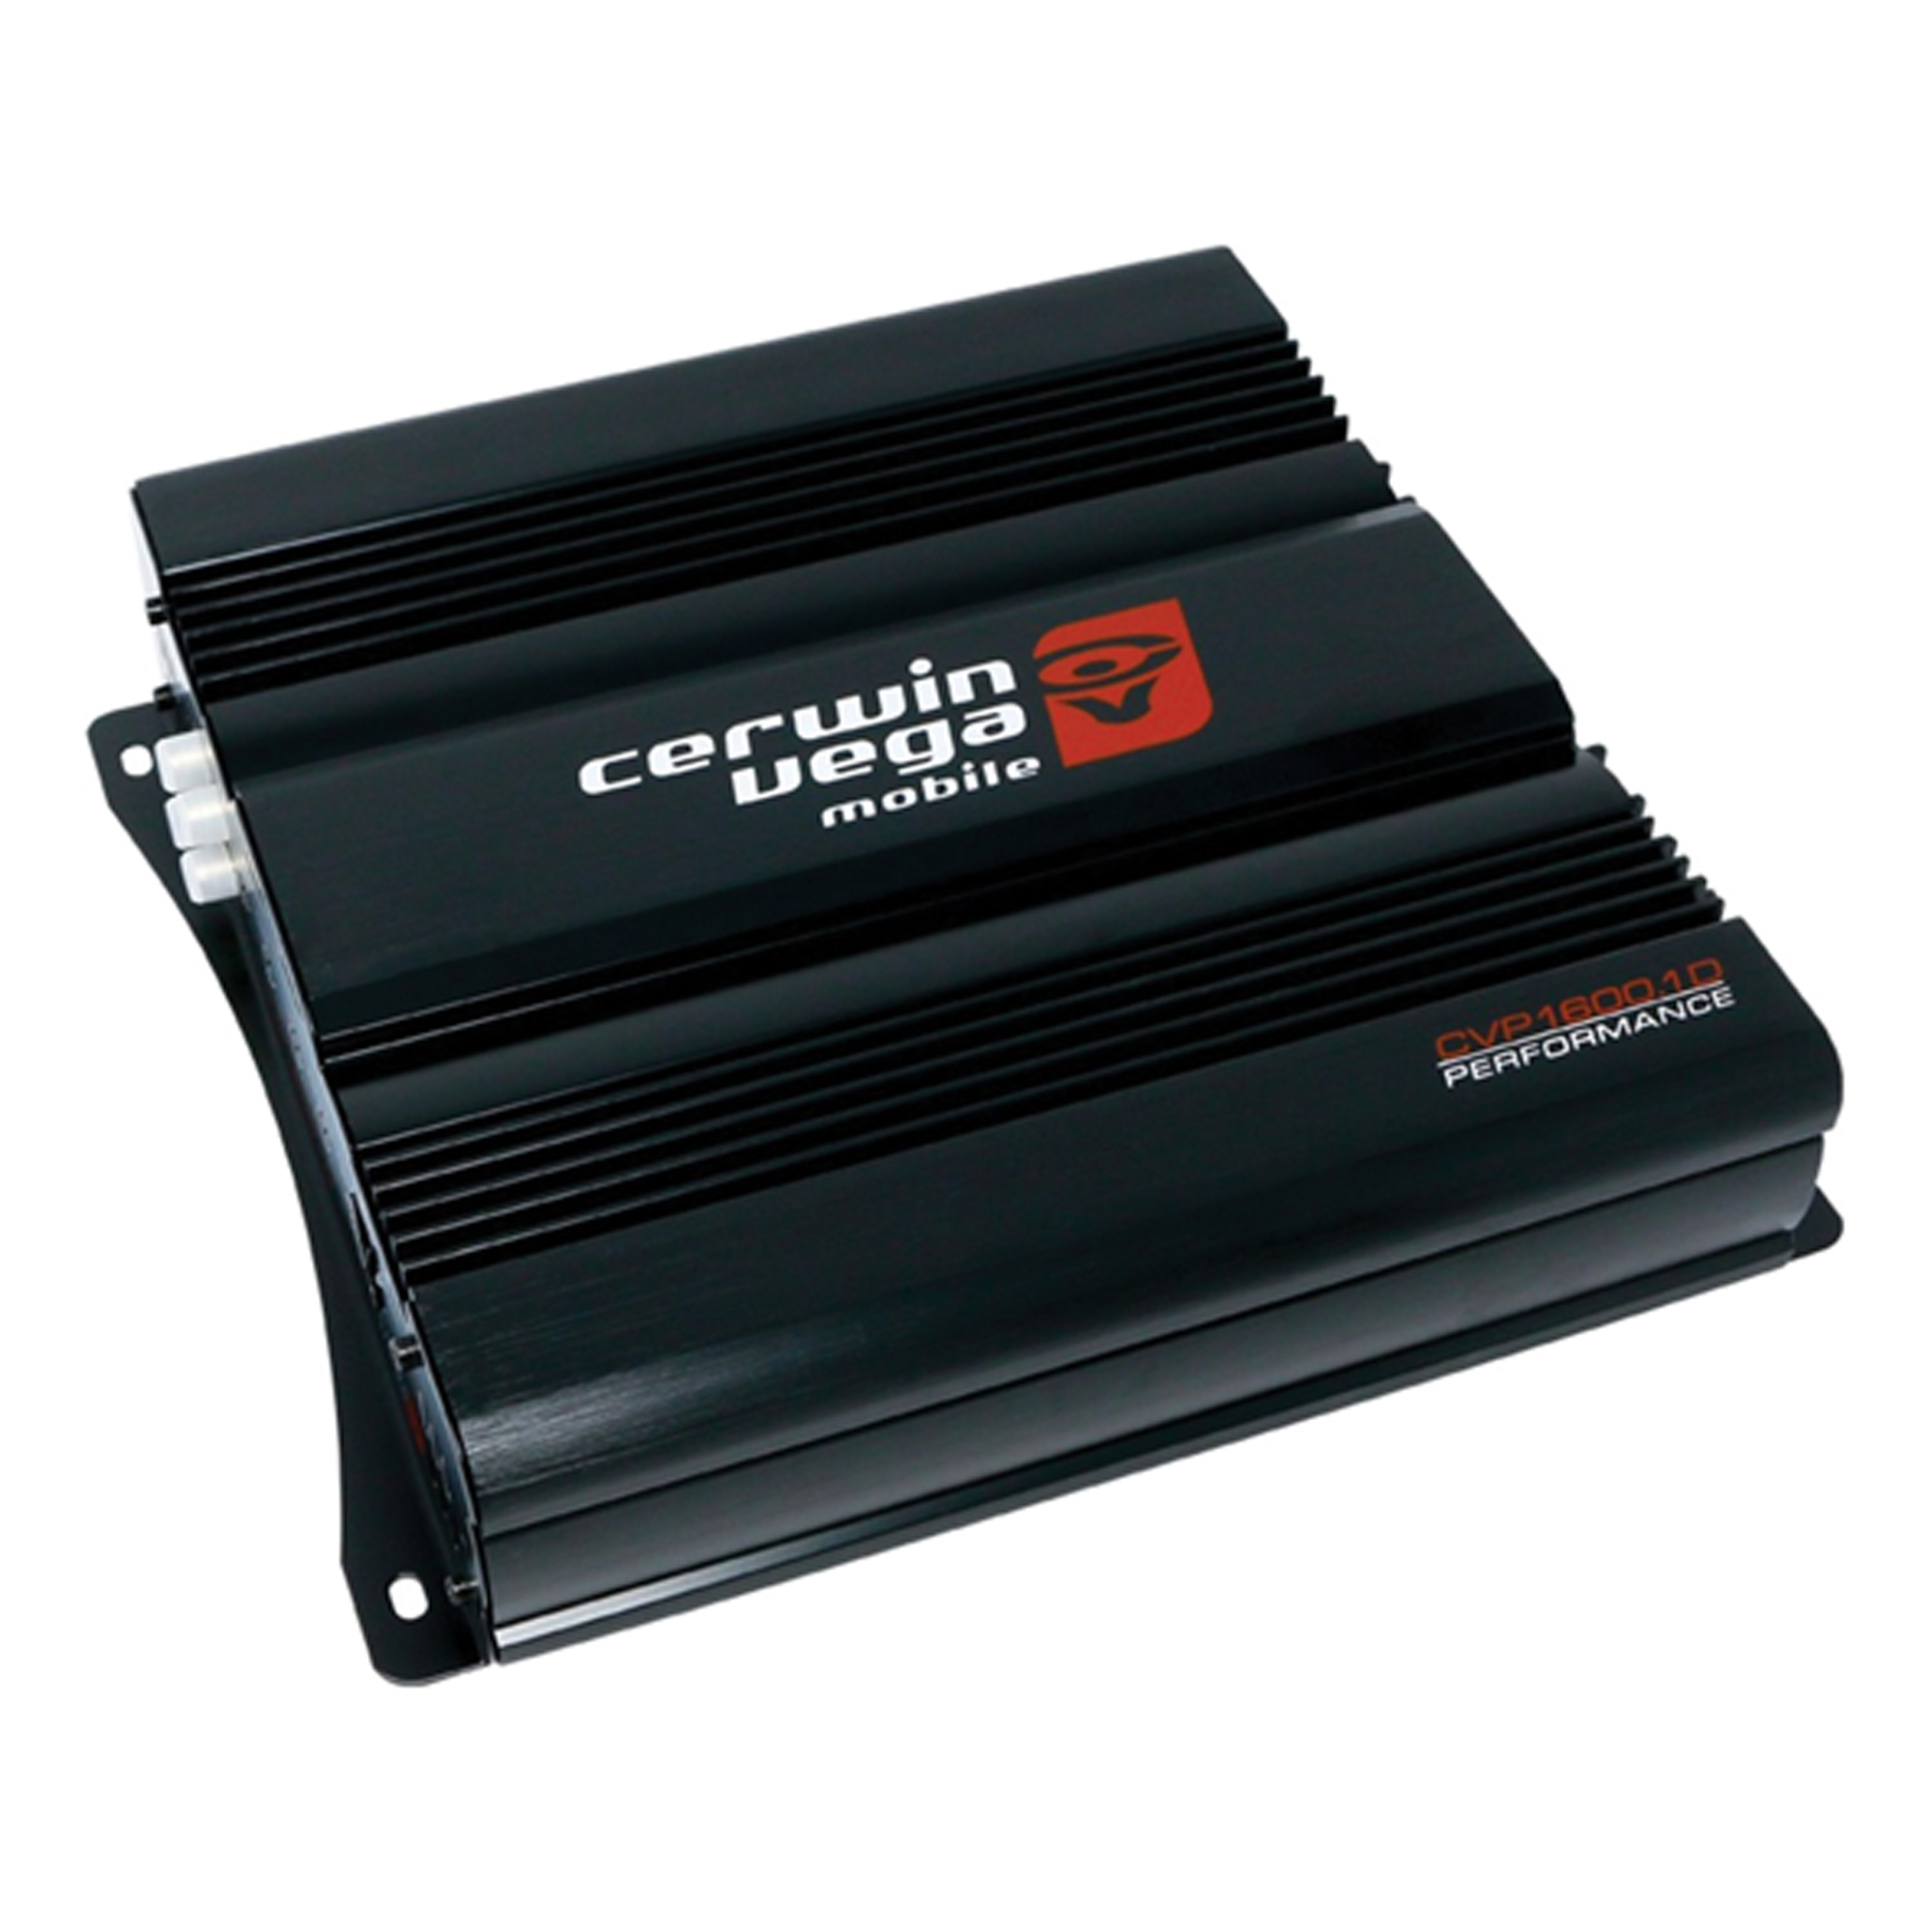 Cerwin-Vega, Monoblock Class D Amp for Subwoofer w/Bass Remote, Model CVP1600.1D